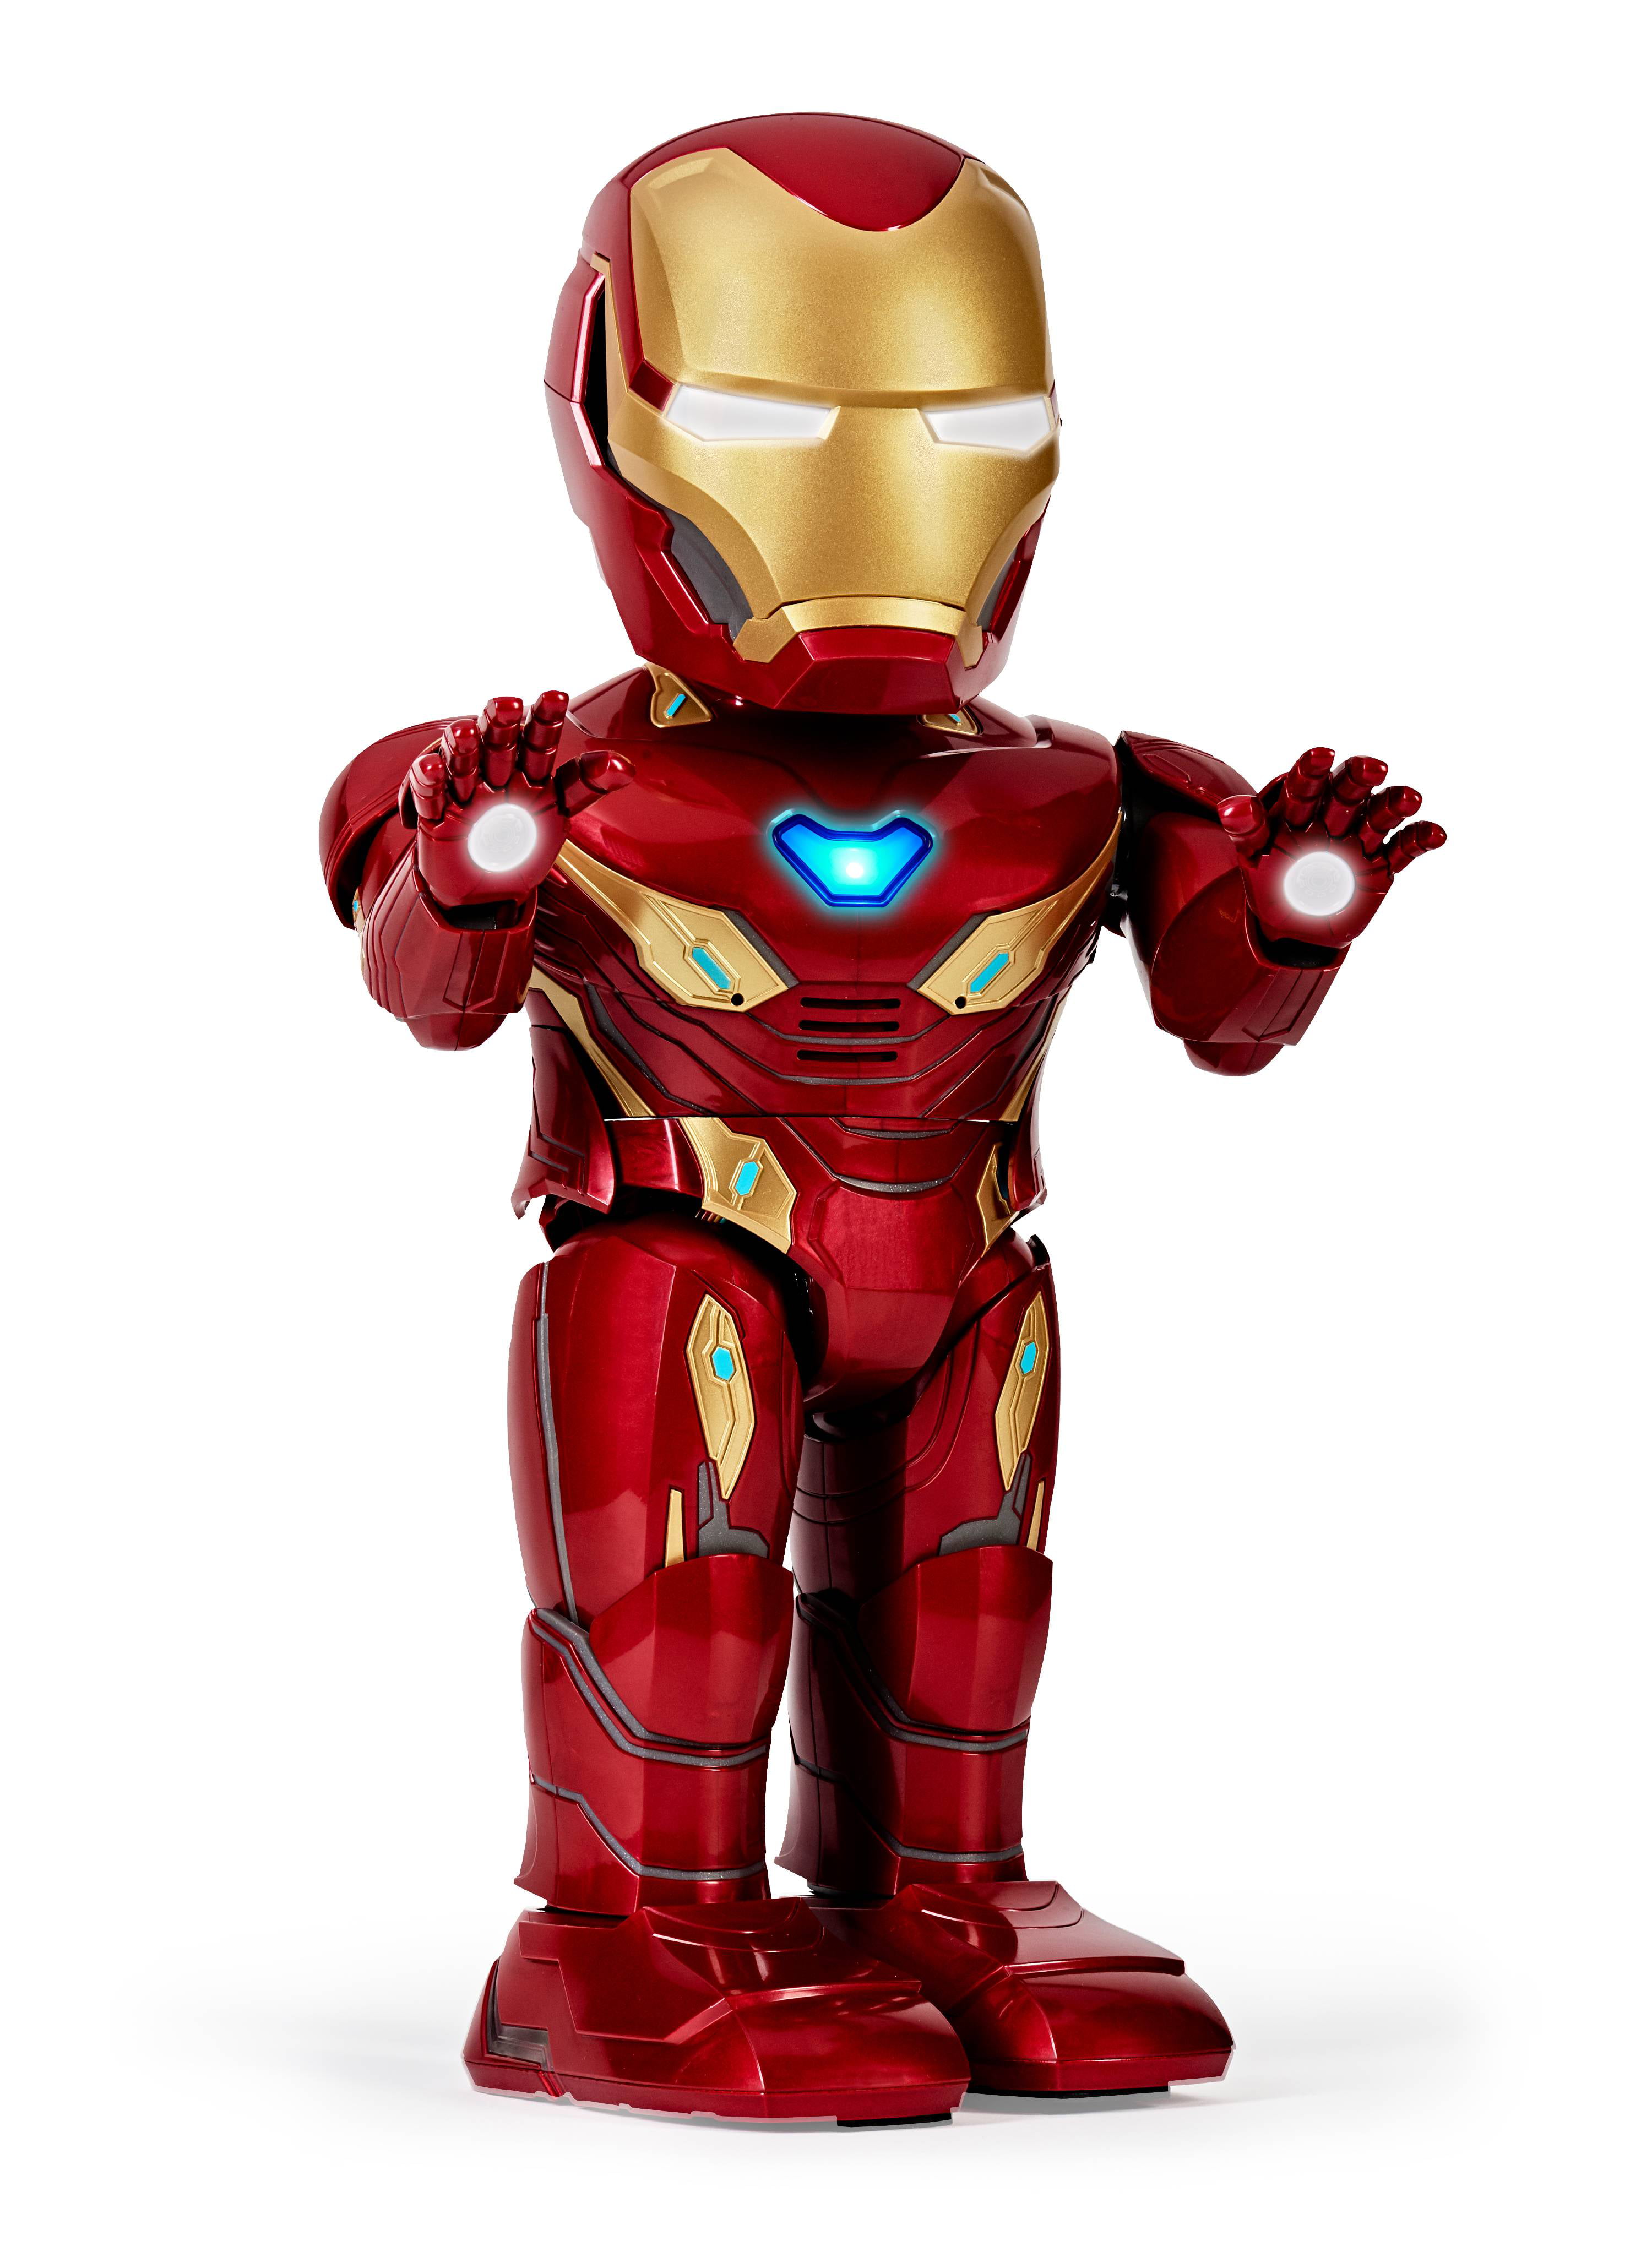 Marvel Avengers Iron Man Action Skin ozobot Interactive Robotics for sale online 